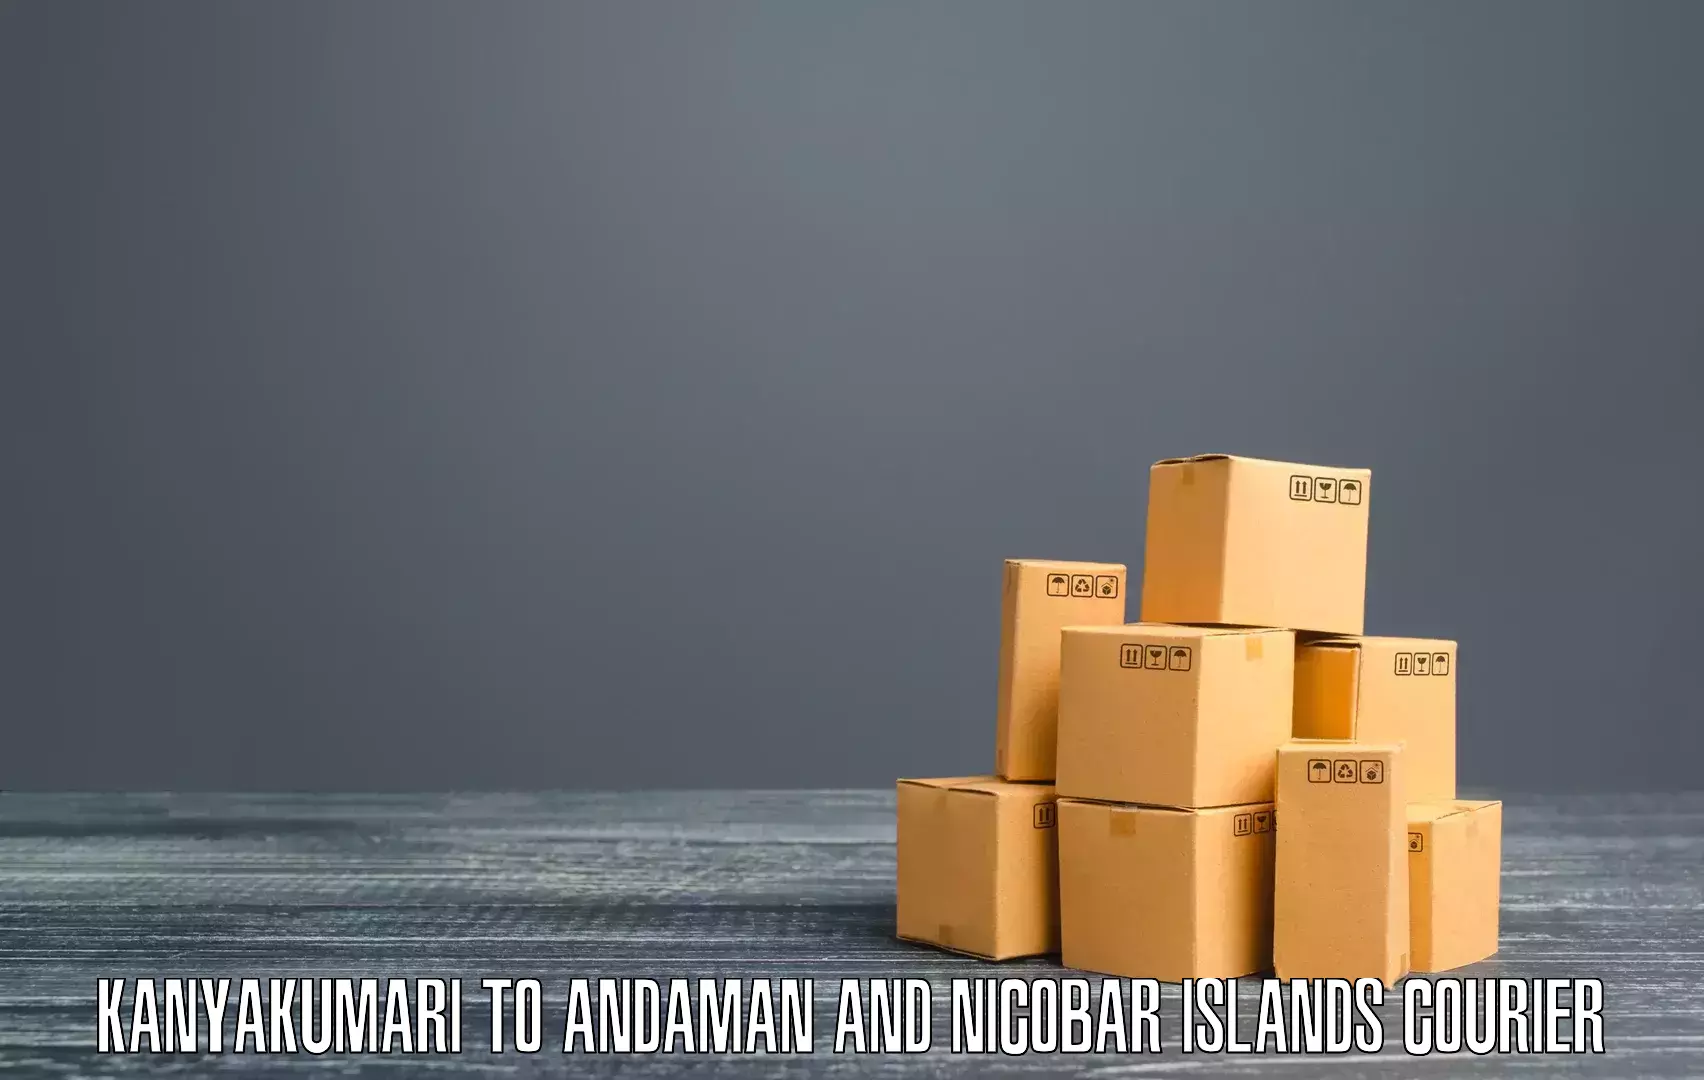 Global logistics network Kanyakumari to Nicobar